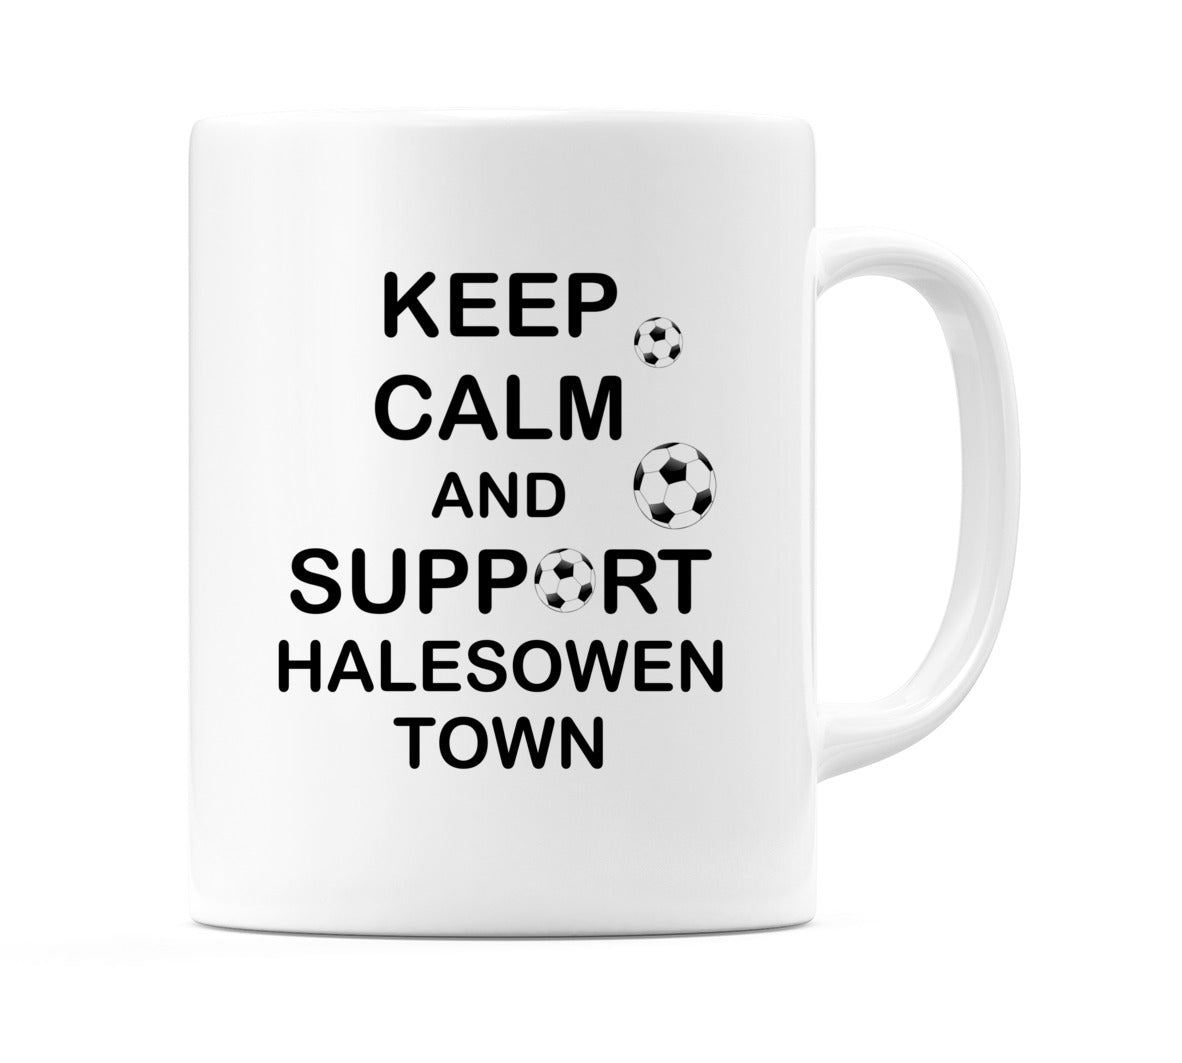 Keep Calm And Support Halesowen Town Mug